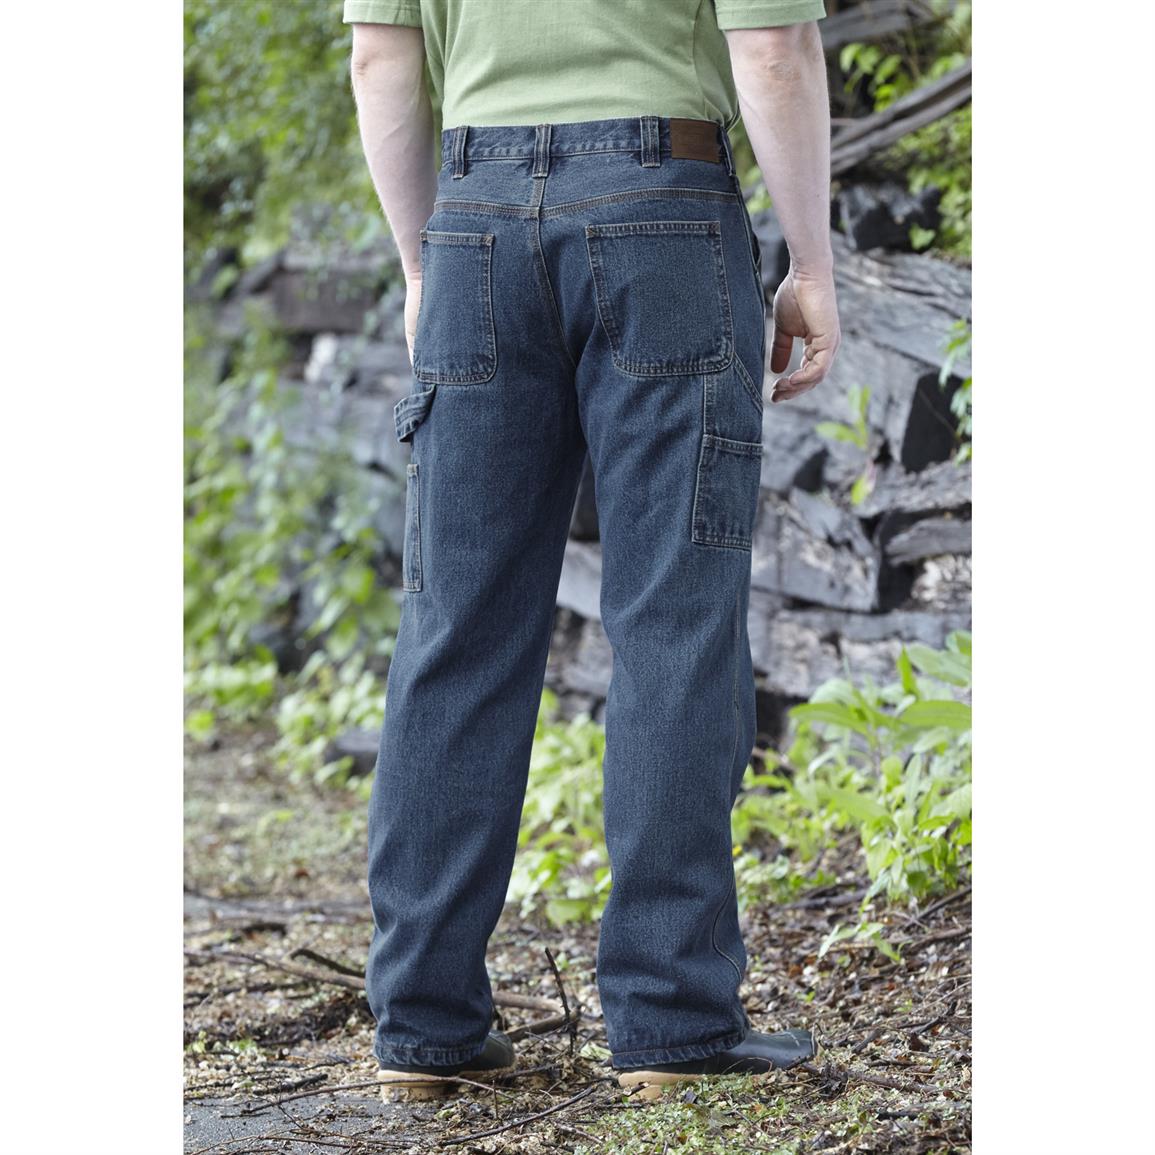 Guide Gear Men's Flannel-Lined Carpenter Jeans, Stonewash - 221529 ...